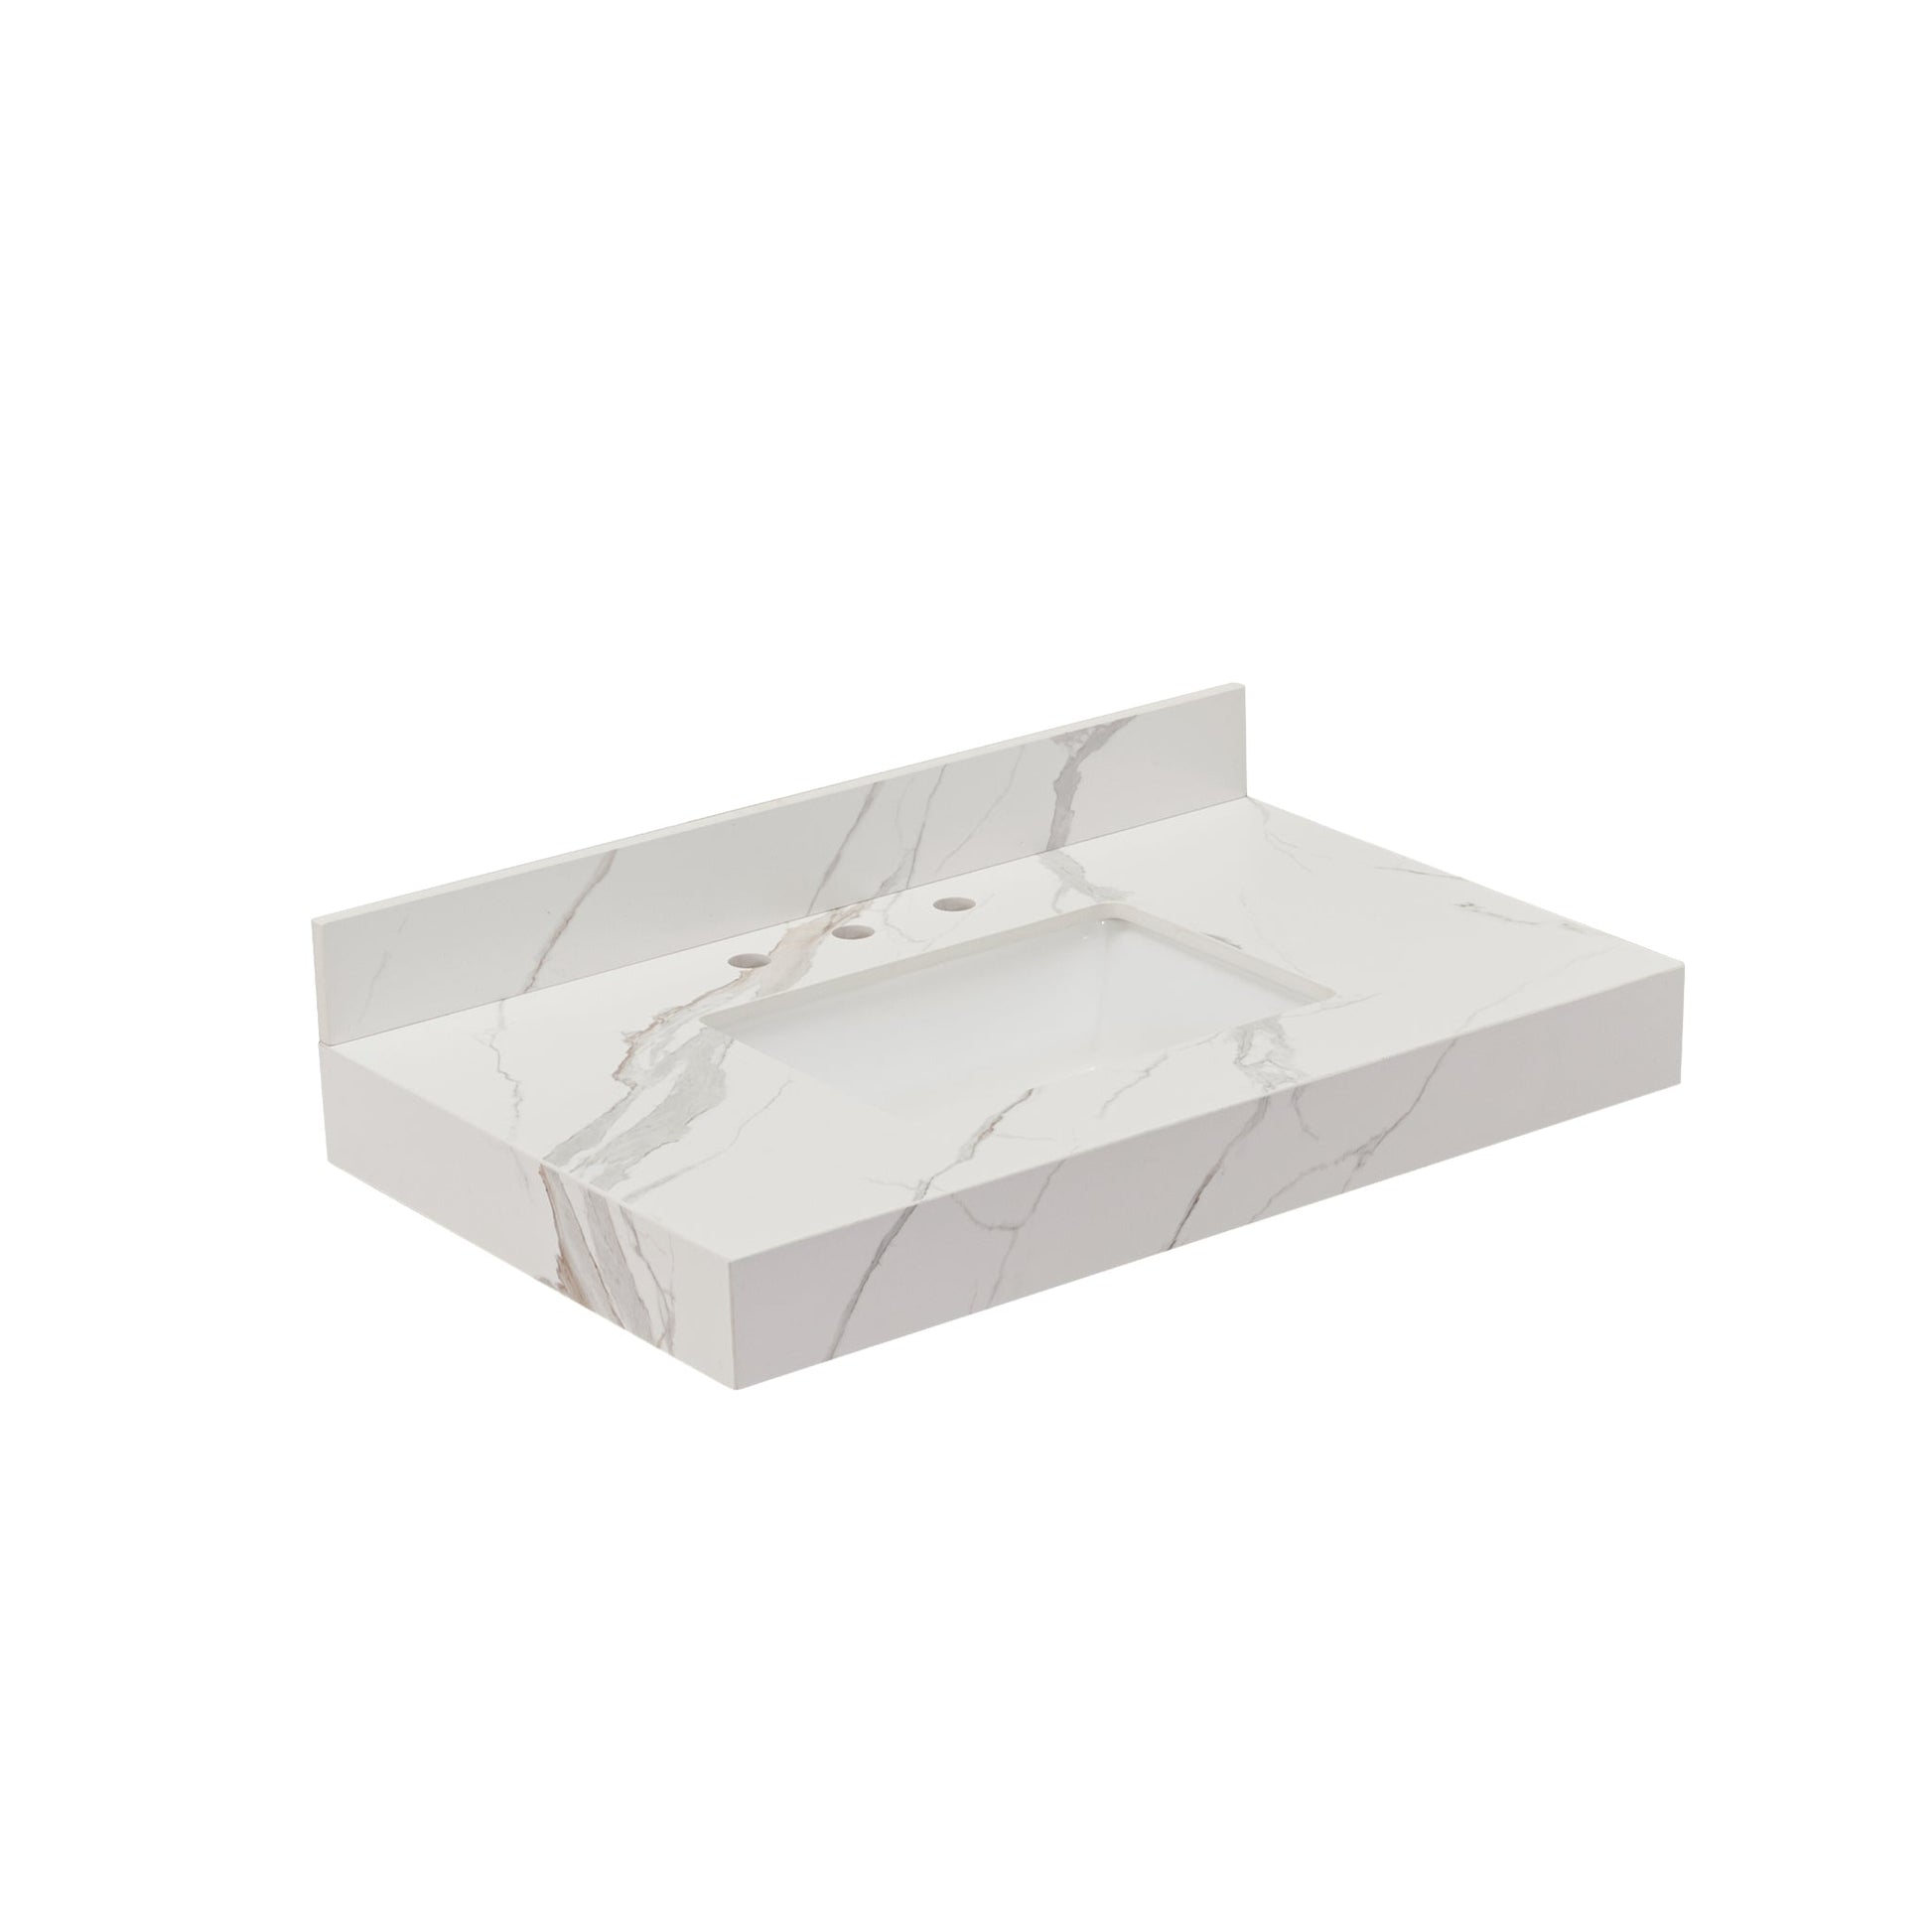 Altair Marseille 36" x 22" Calacatta White Apron Composite Stone Bathroom Vanity Top With White SInk